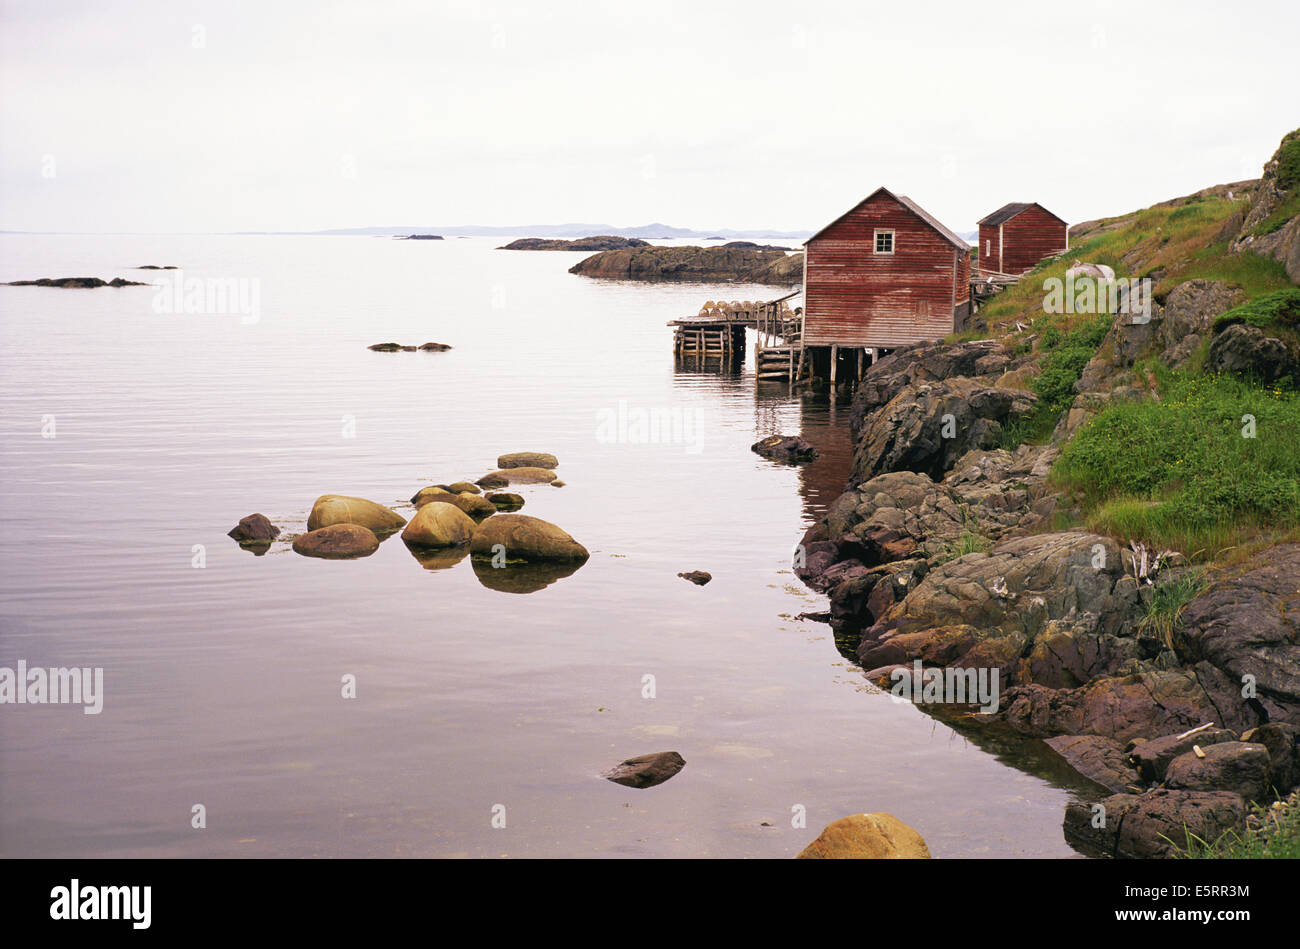 House along rocky coastline in Newfoundland, Canada Stock Photo